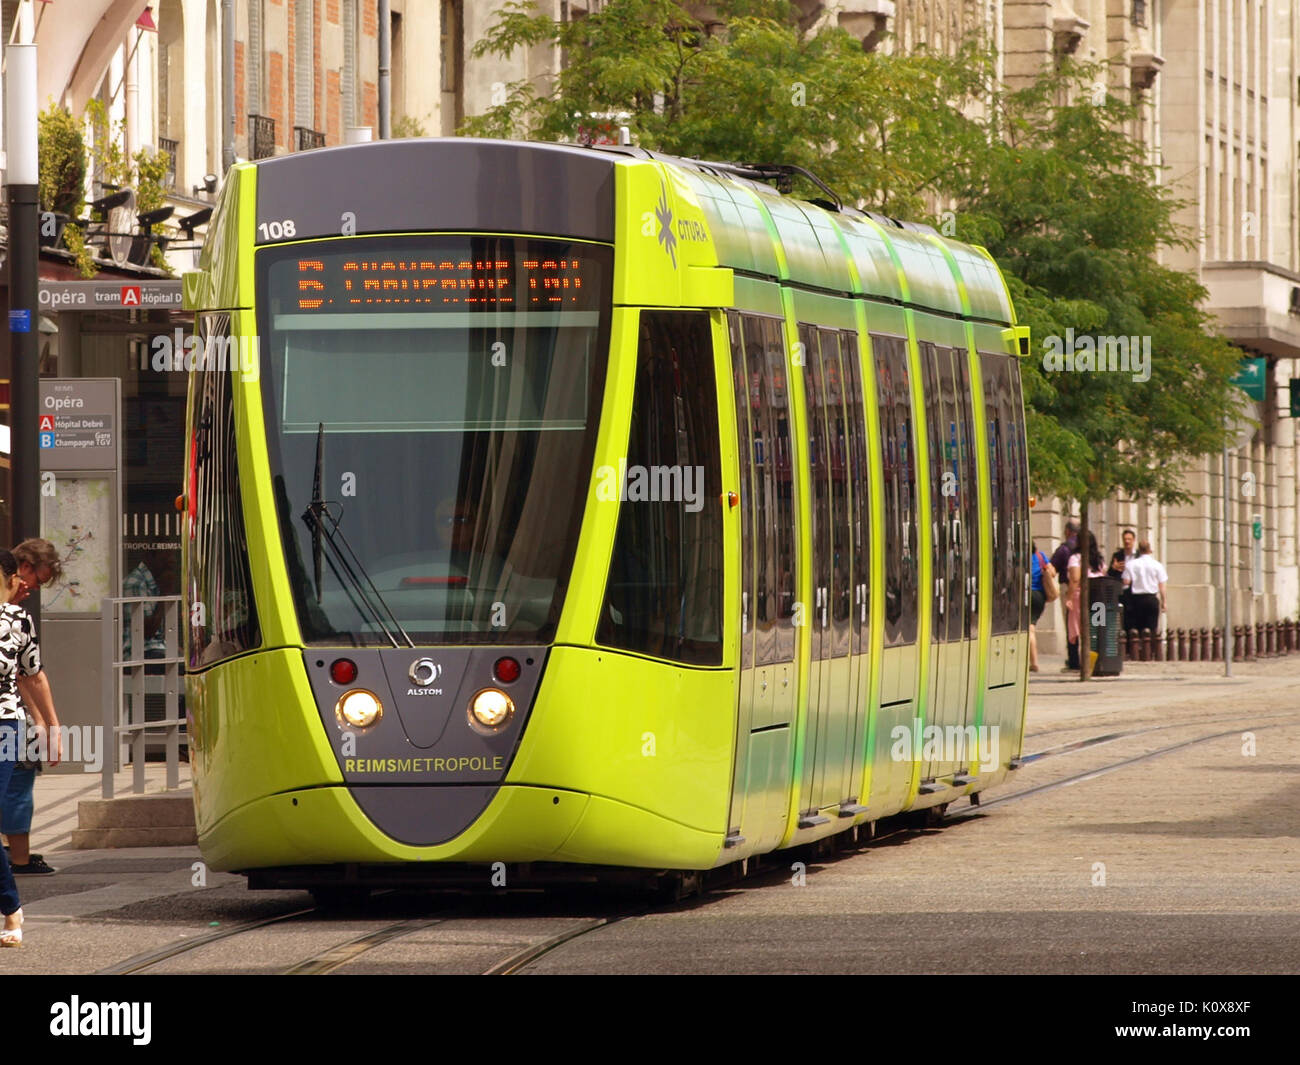 Alstom tram green wagon 108 of the Reimsmetropole Stock Photo